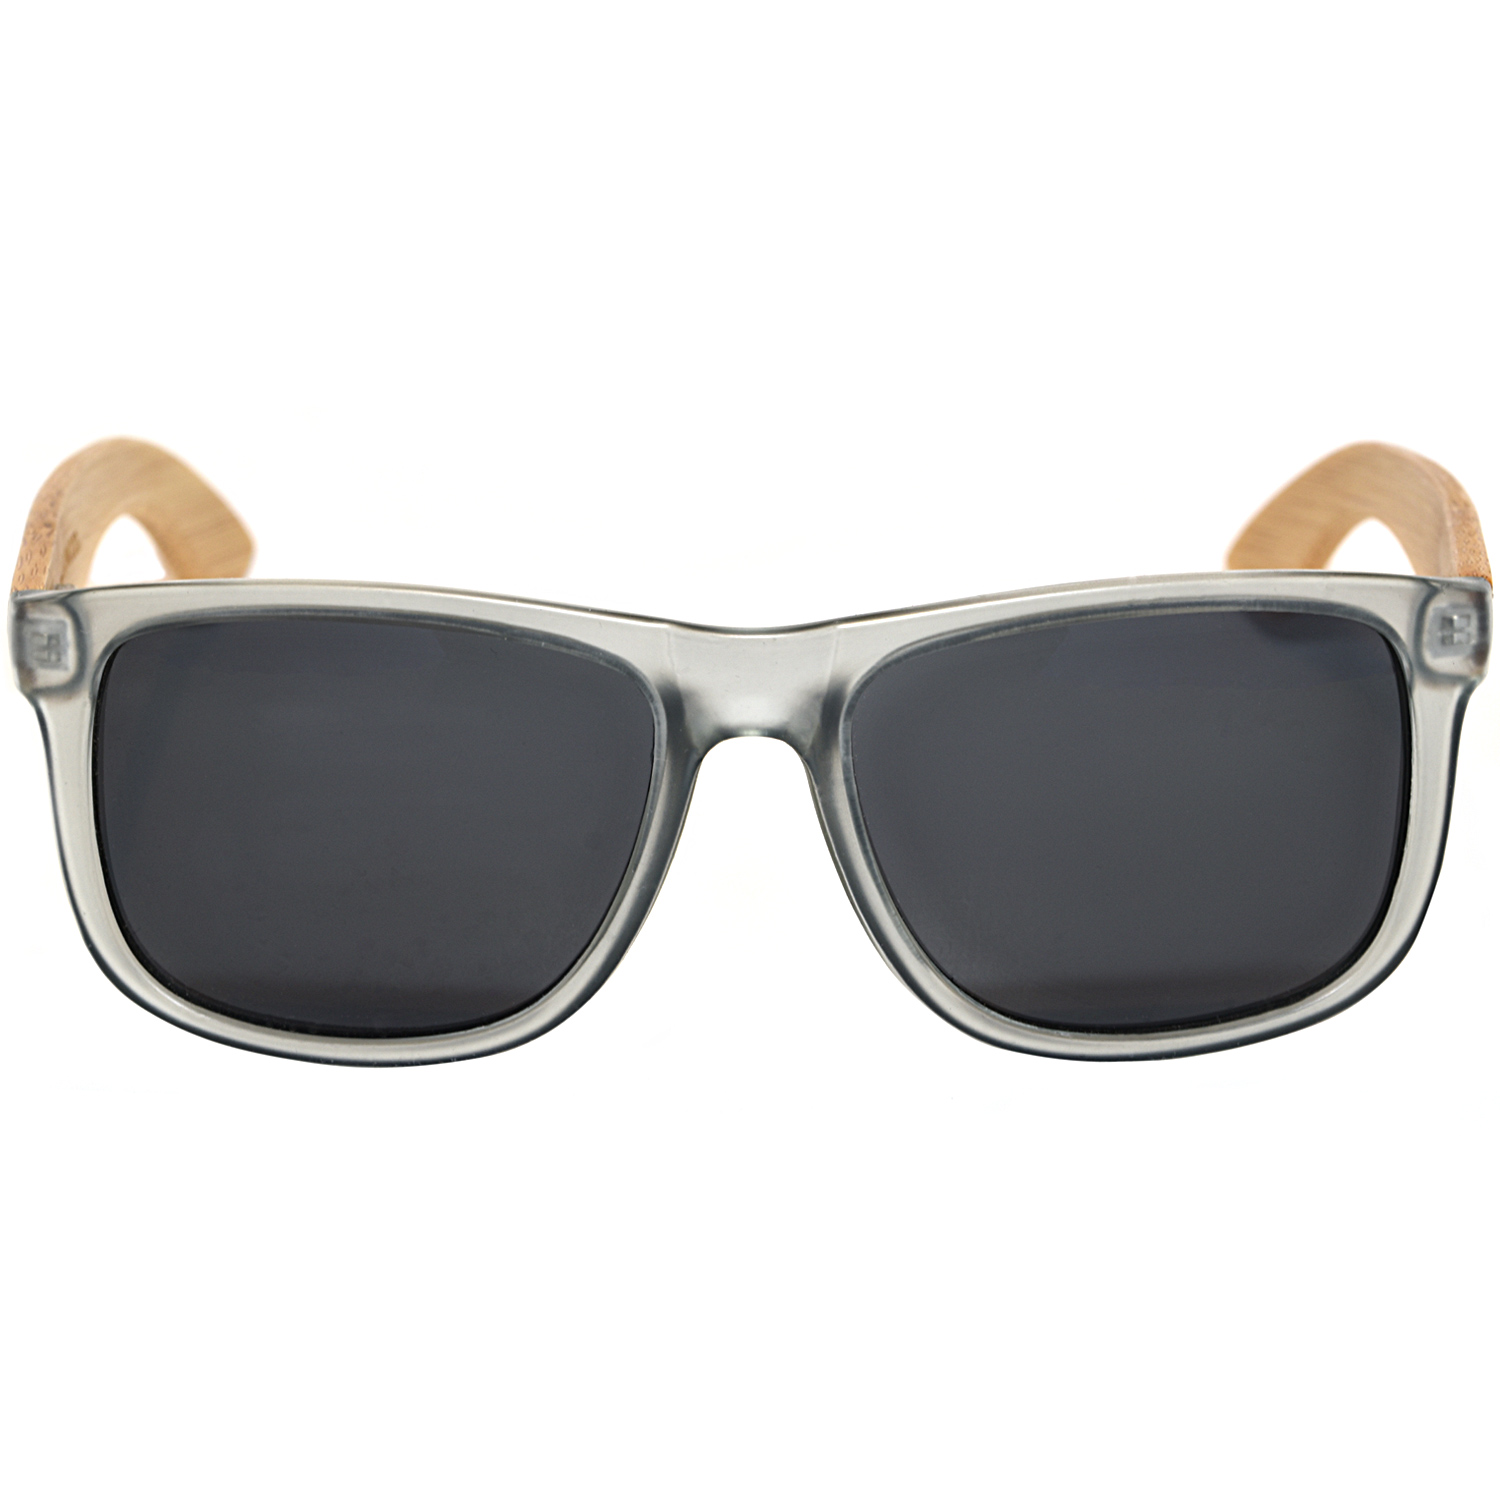 Square bamboo wood sunglasses black polarized lenses